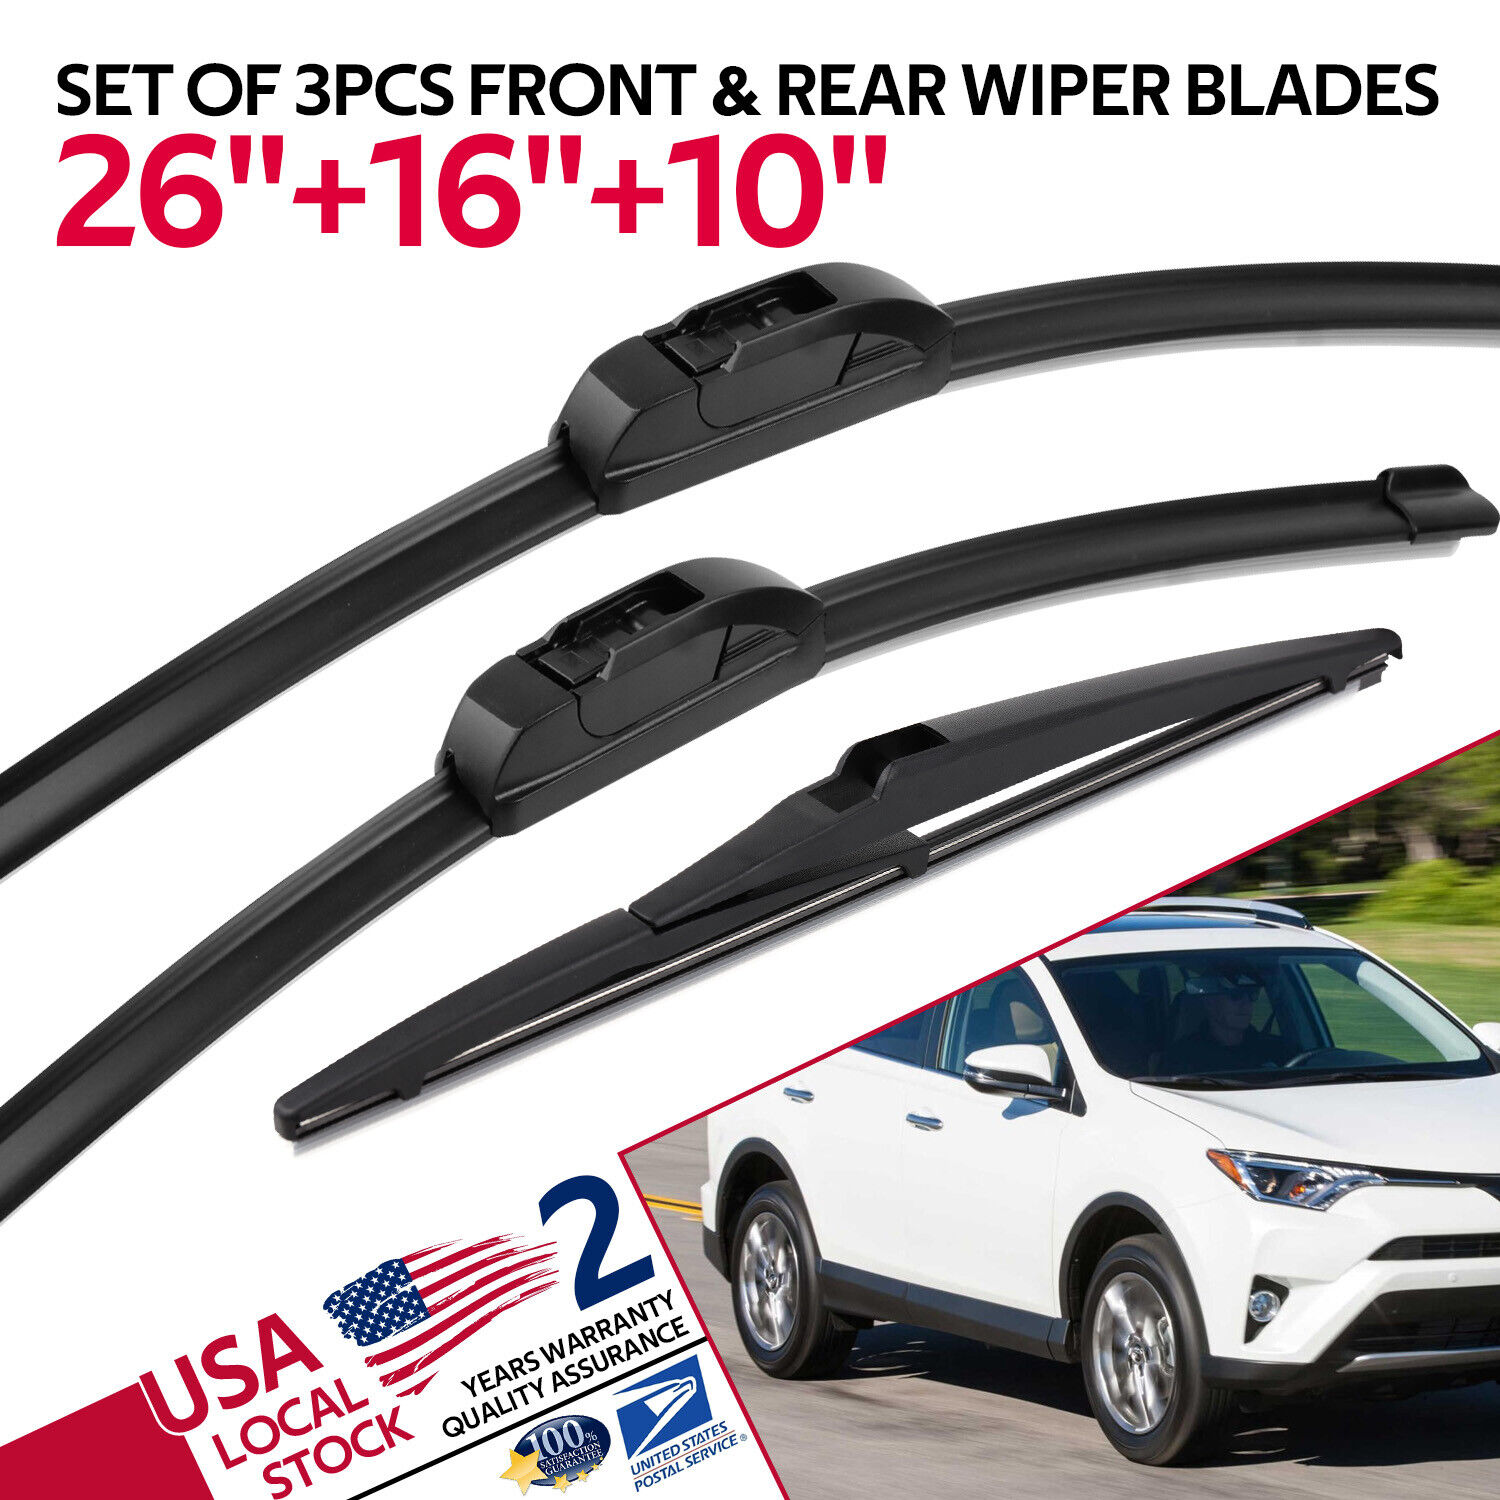 OEM QUALITY Windshield Wiper Blade Kit For Toyota RAV4 2013-2018 of 26''/16''/10